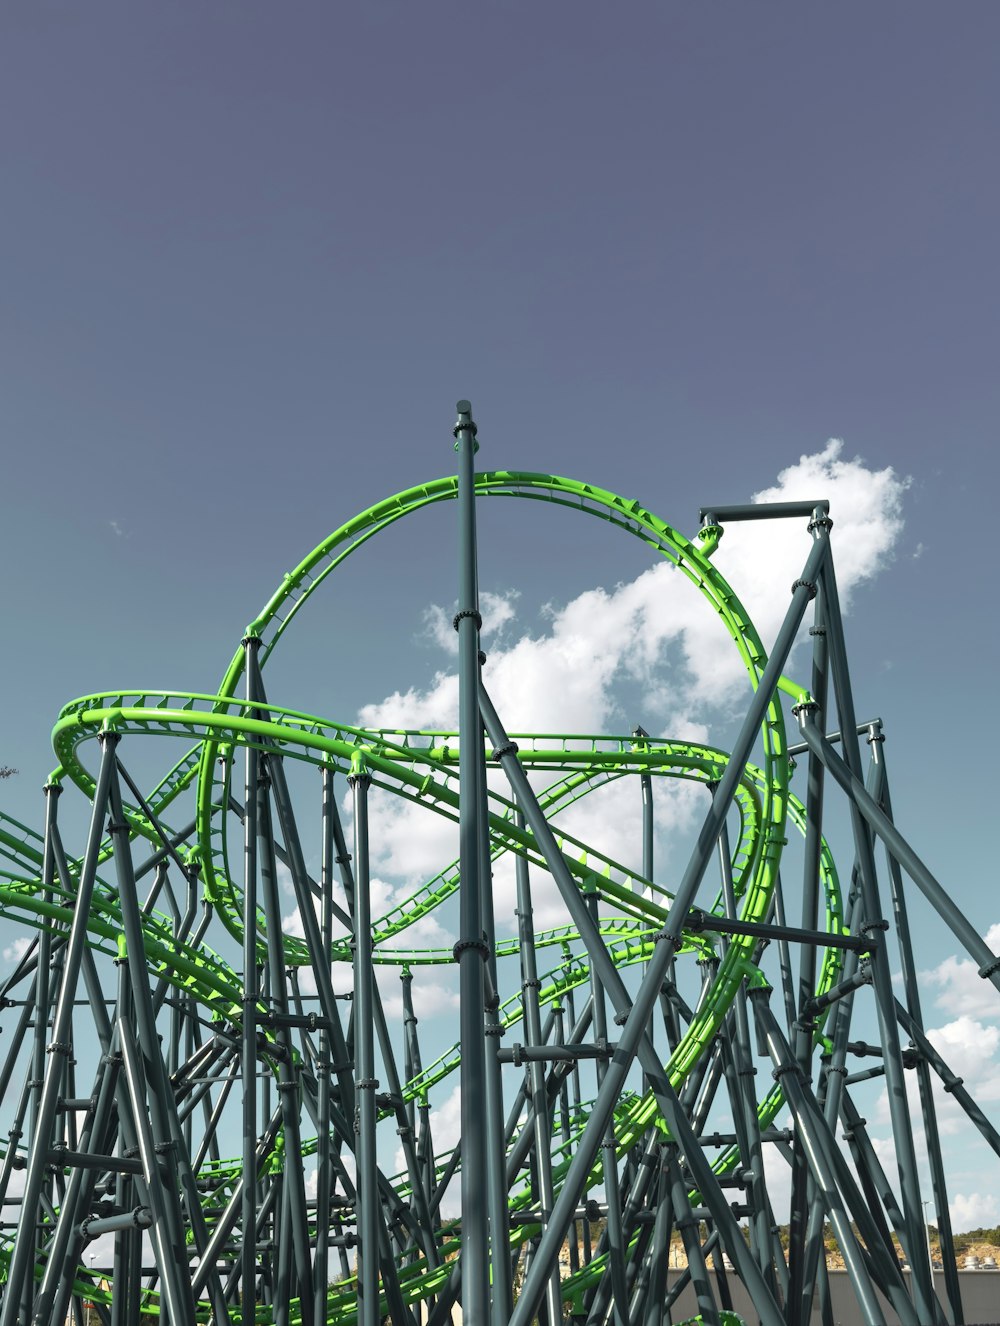 a green roller coaster going down a hill